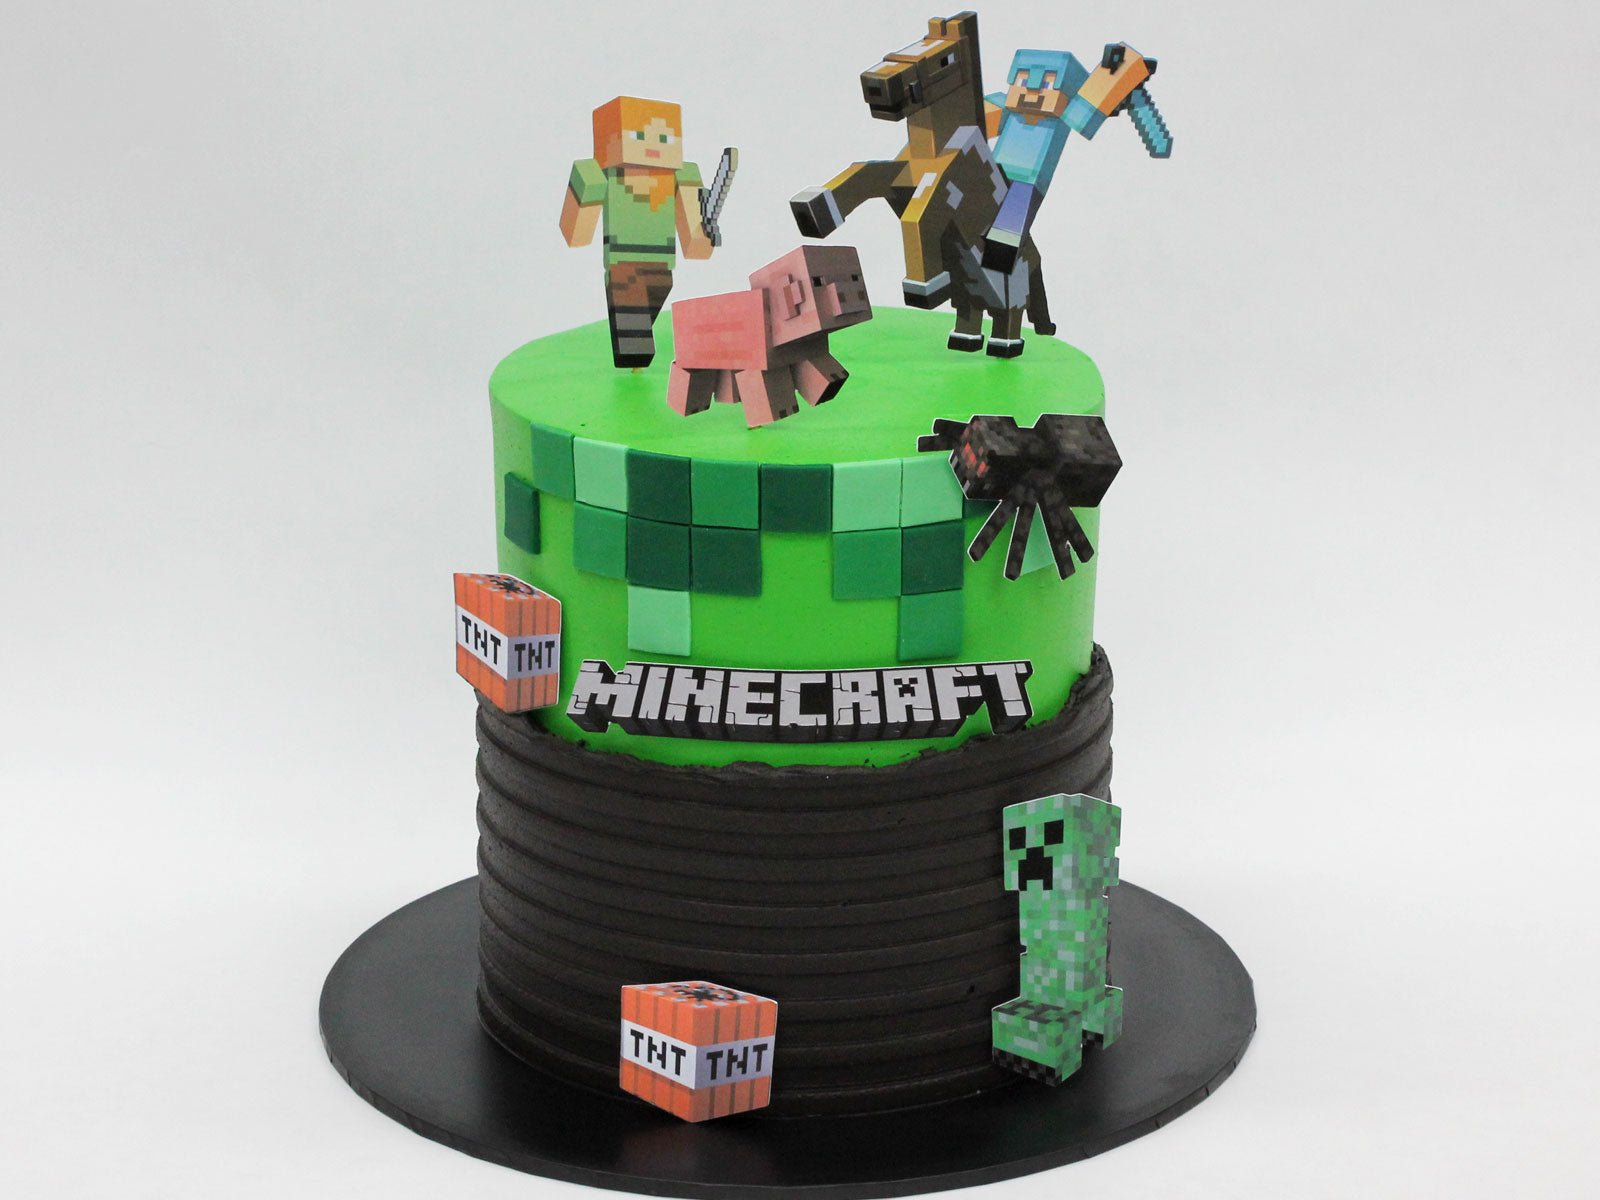 Check this insane MC cake for nephews birthday! 🟩🟫🟨🟦 : r/Minecraft